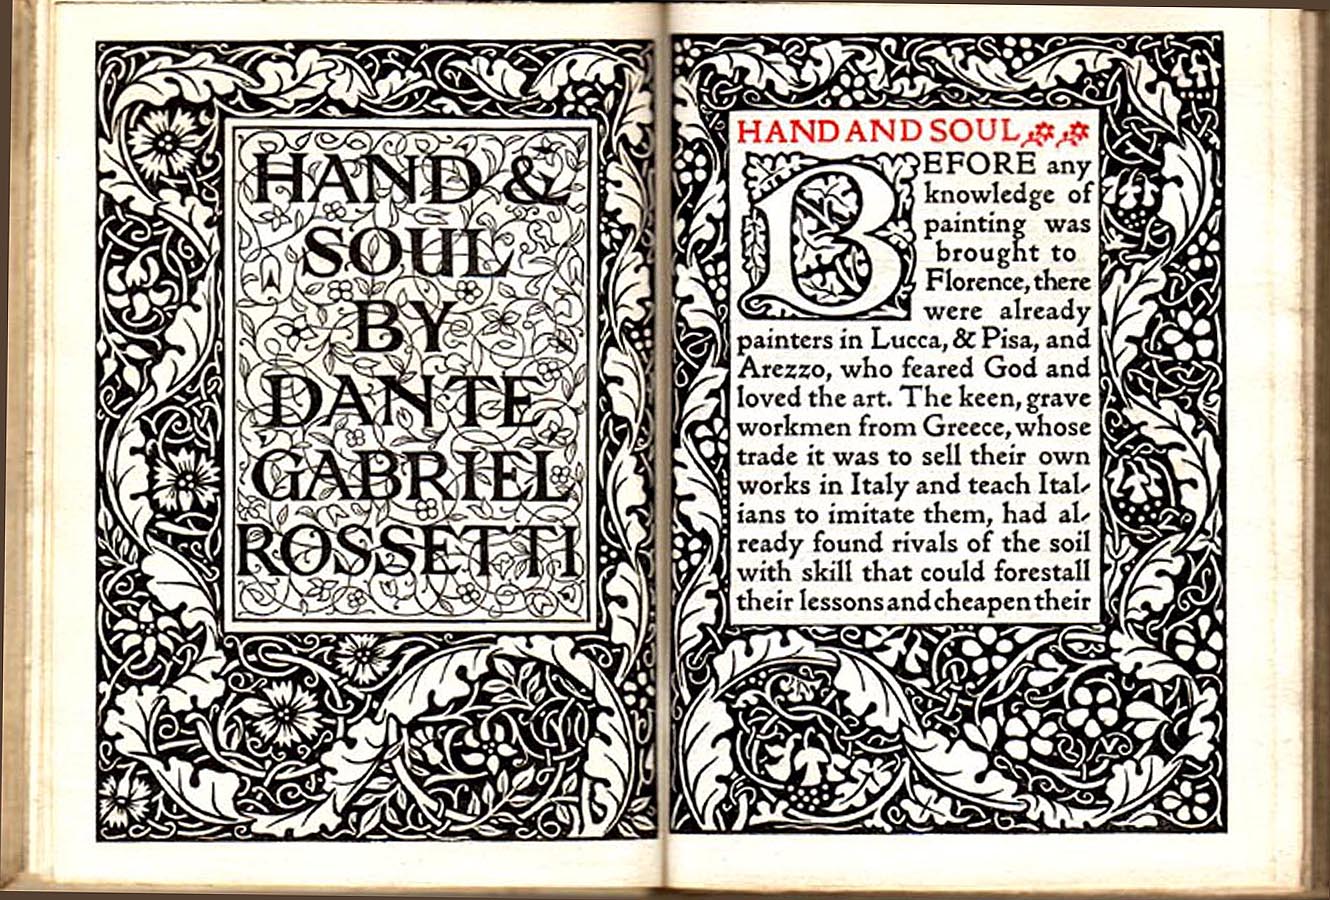 Dante Gabriel Rossetti: Hand and Soul